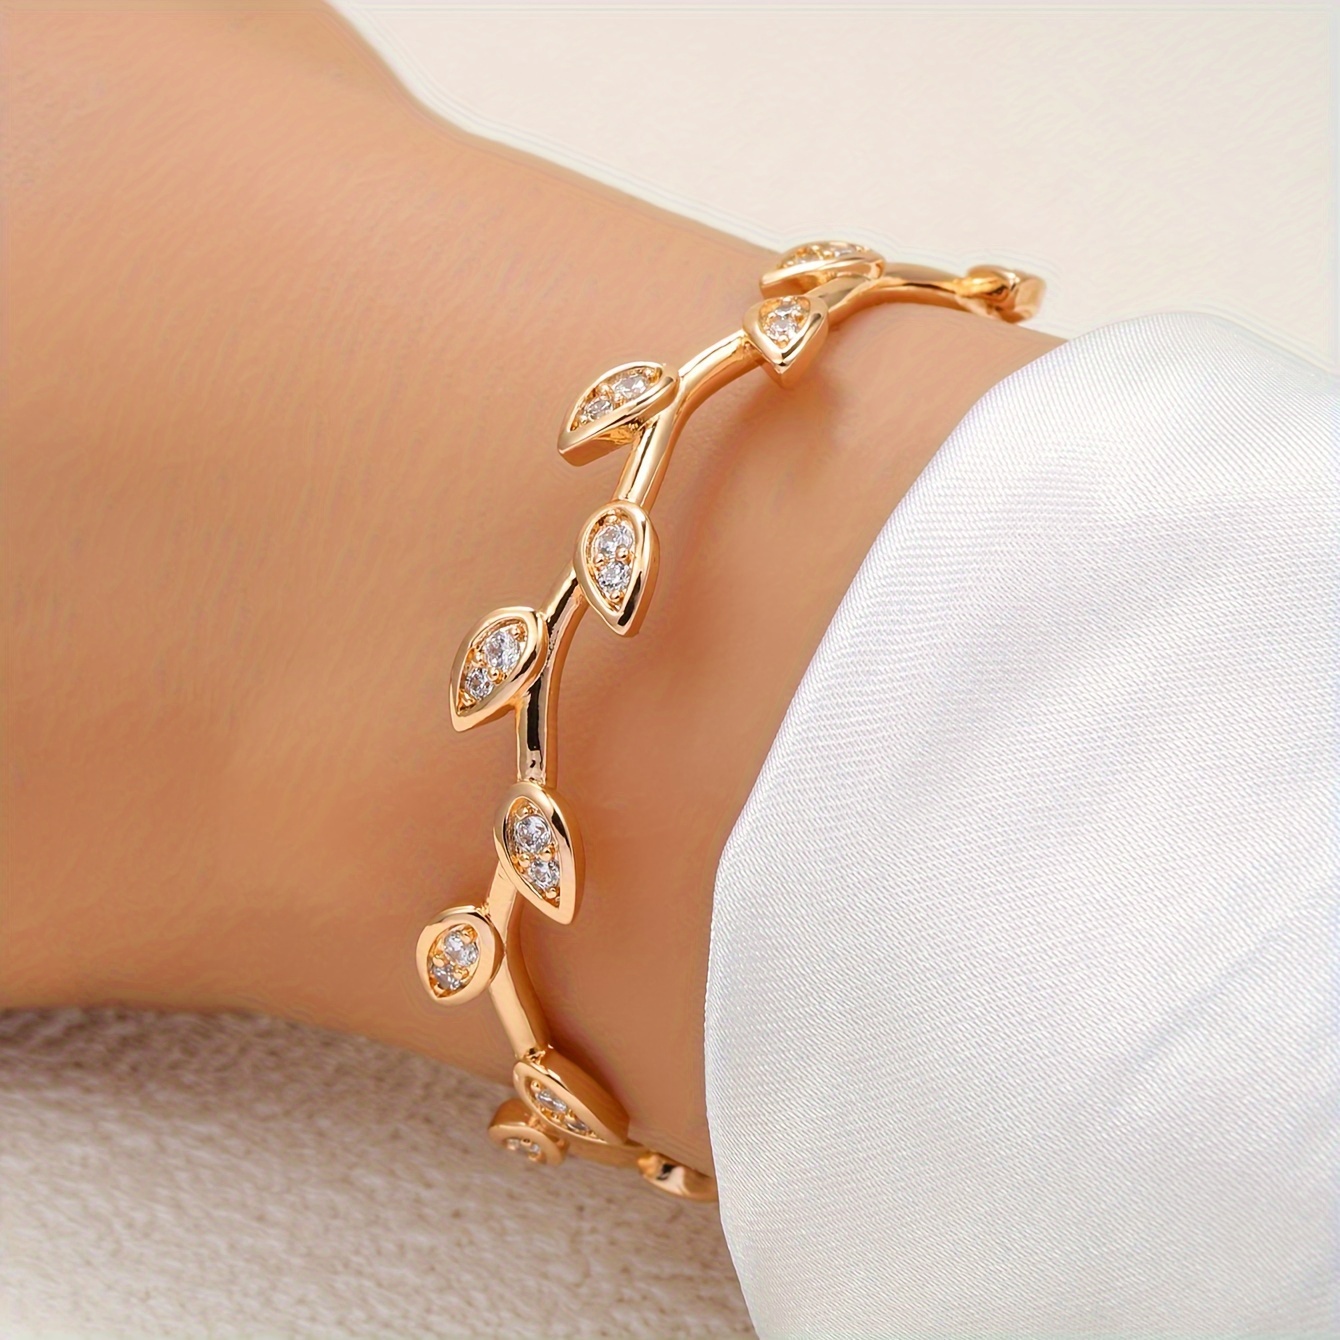 Double Layer Bracelet Gold for Women, Charm Bracelets,14k Real Gold Flower  Bracelet, Minimalist, Birthday Delicate Jewelry Gift to Her 